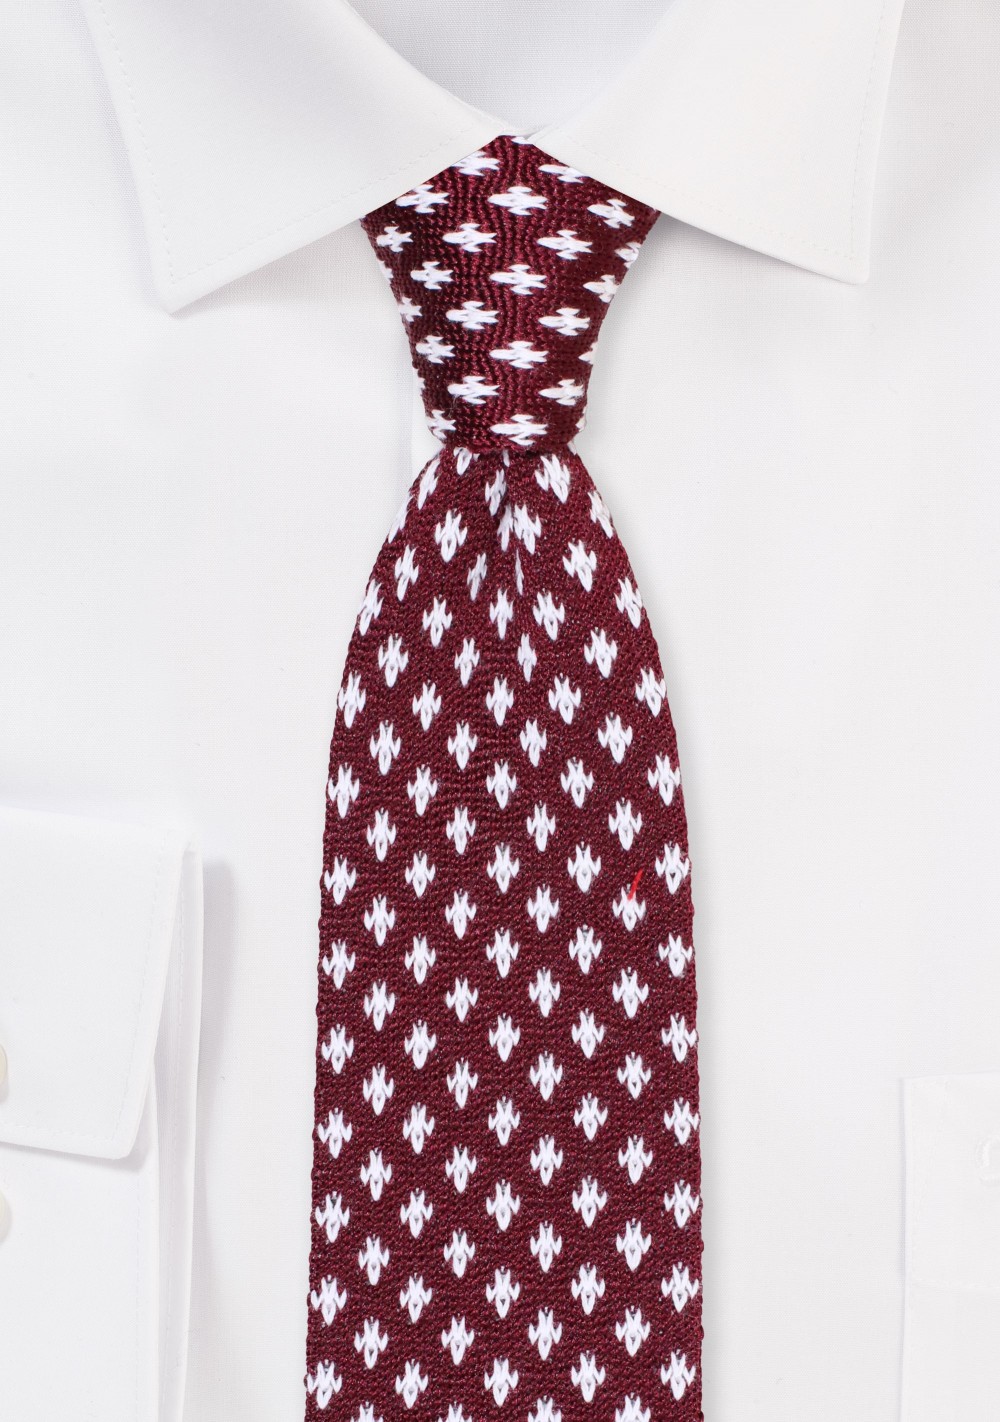 Fleur De Lis Silk Knit Tie in Burgundy